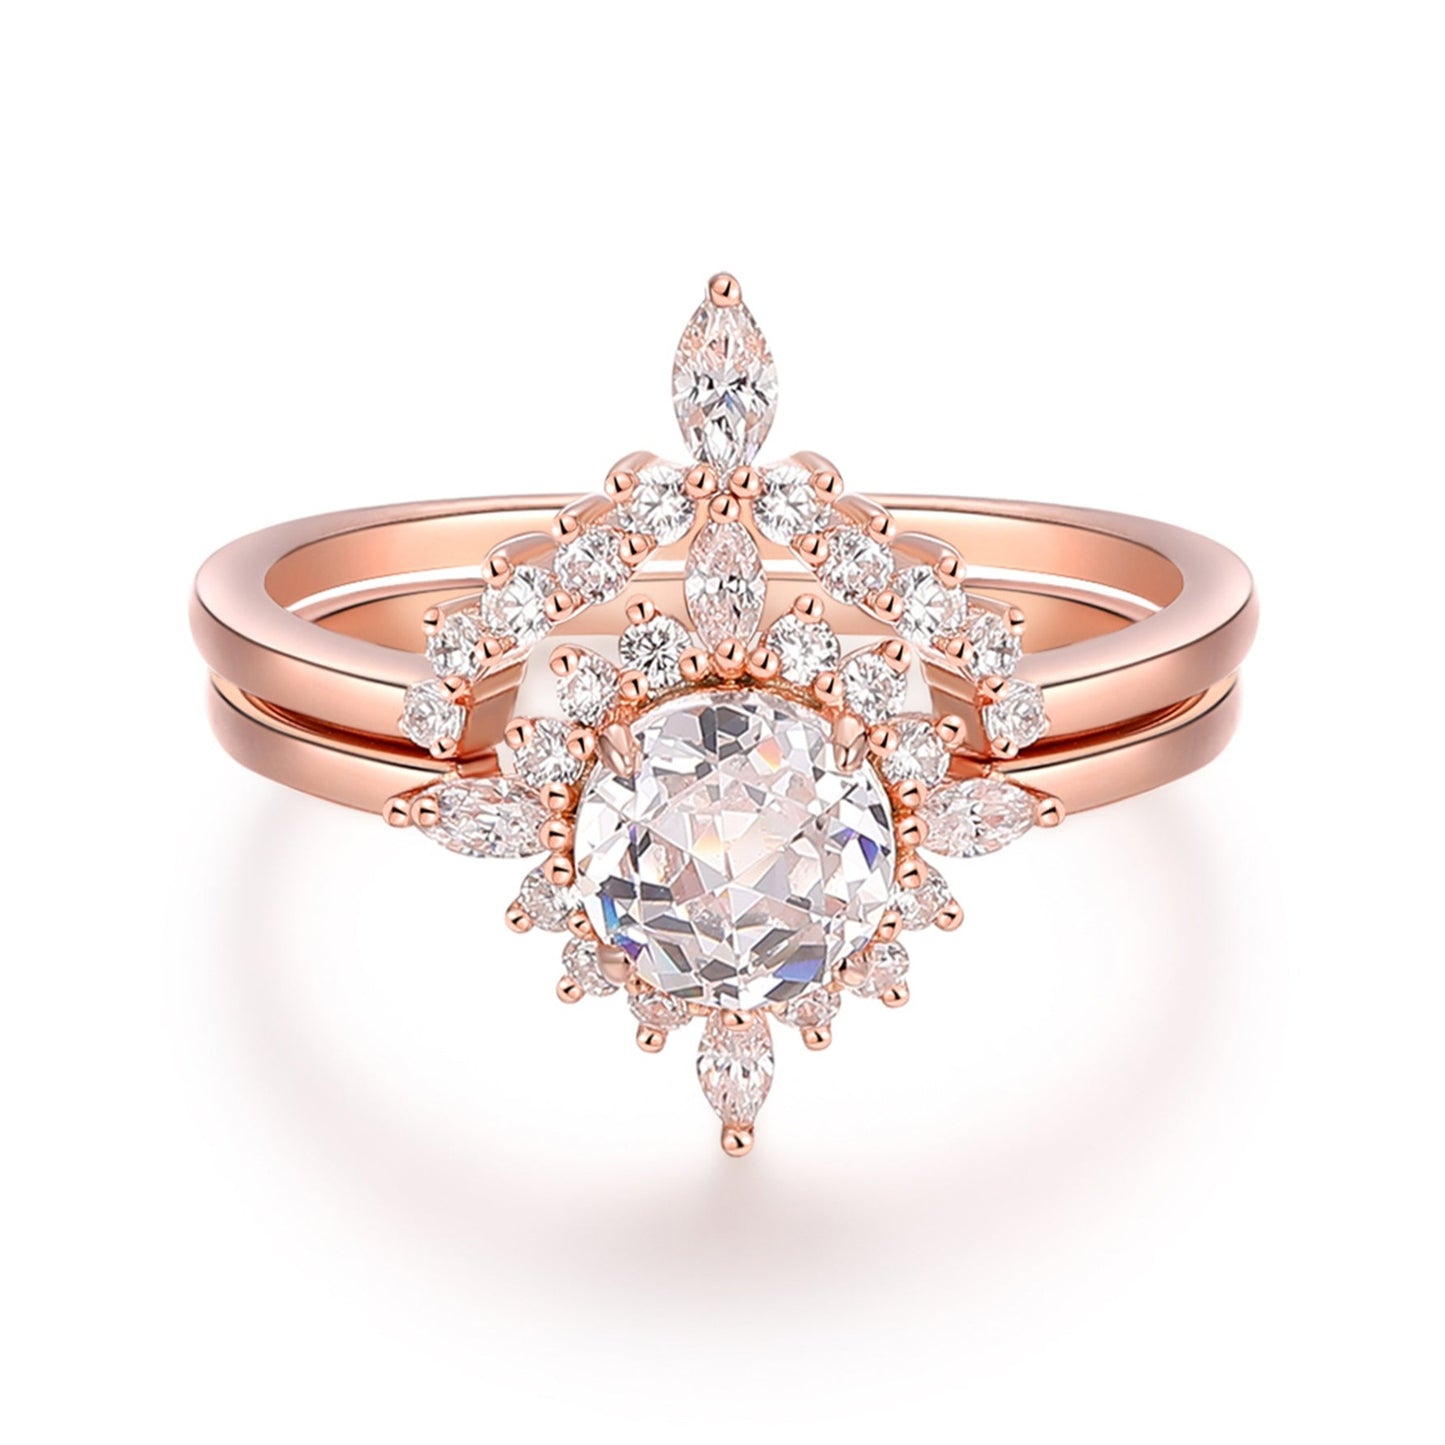 Halo Moissanite Promise Engagement Ring, Unique Rose Gold Round Cut 6mm Moissanite Ring, Vintage Bridal Wedding Sets